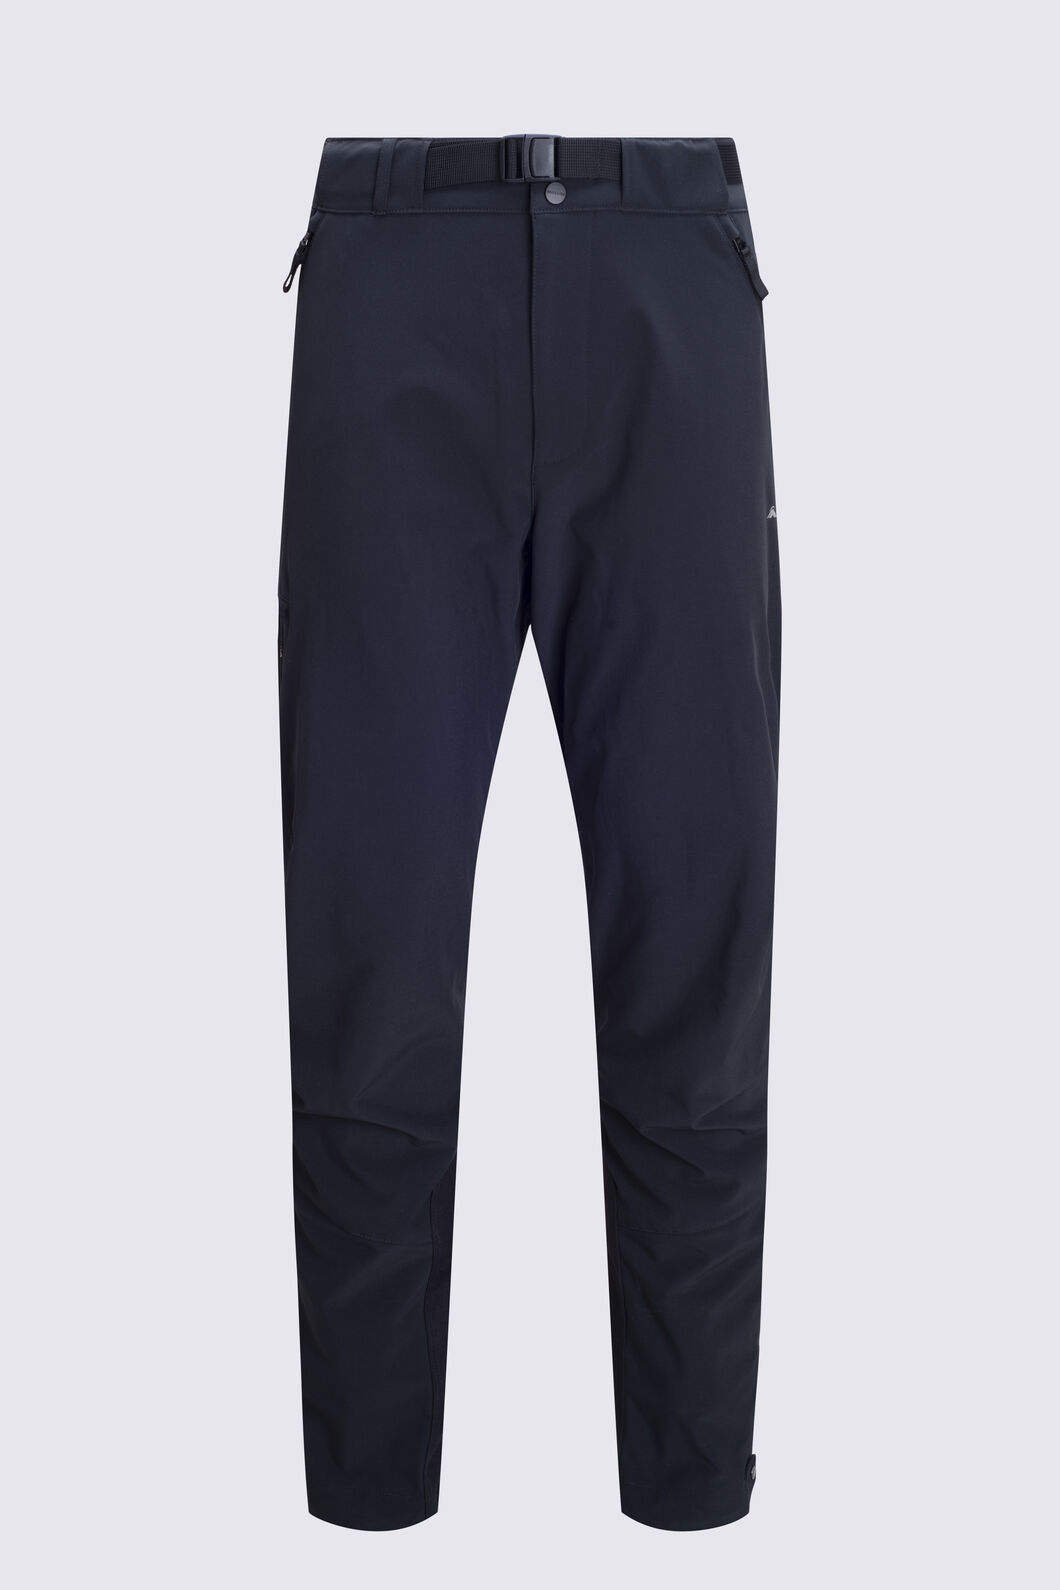 Macpac Fitzroy Alpine Series Softshell Pants — Men's